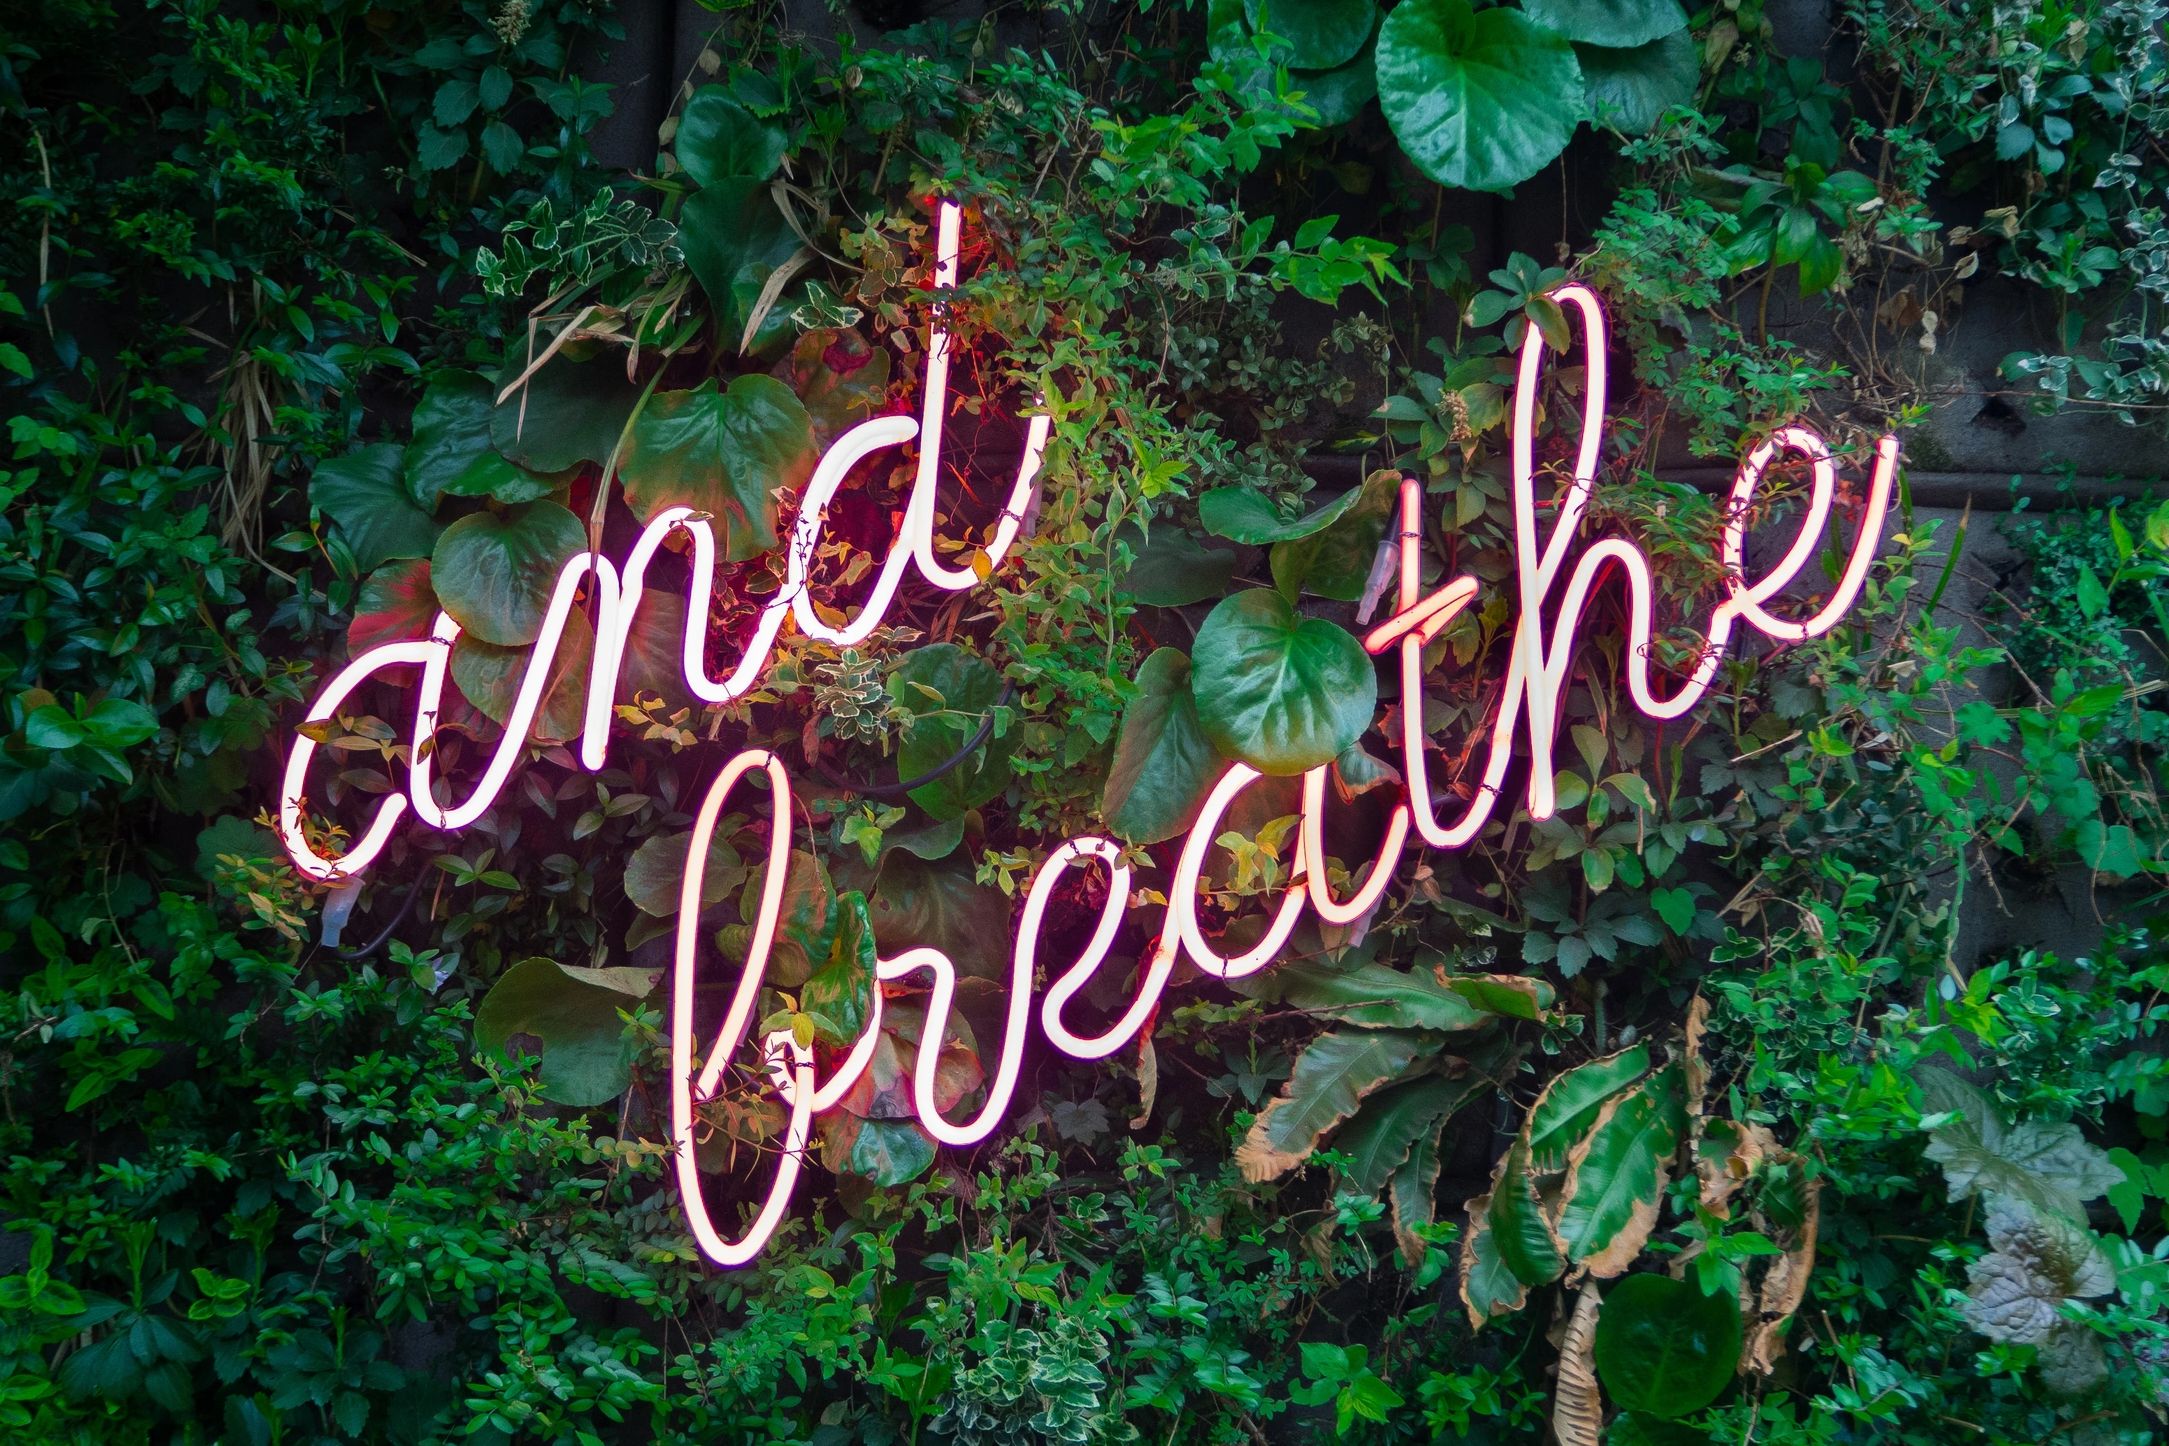 Breathe sign